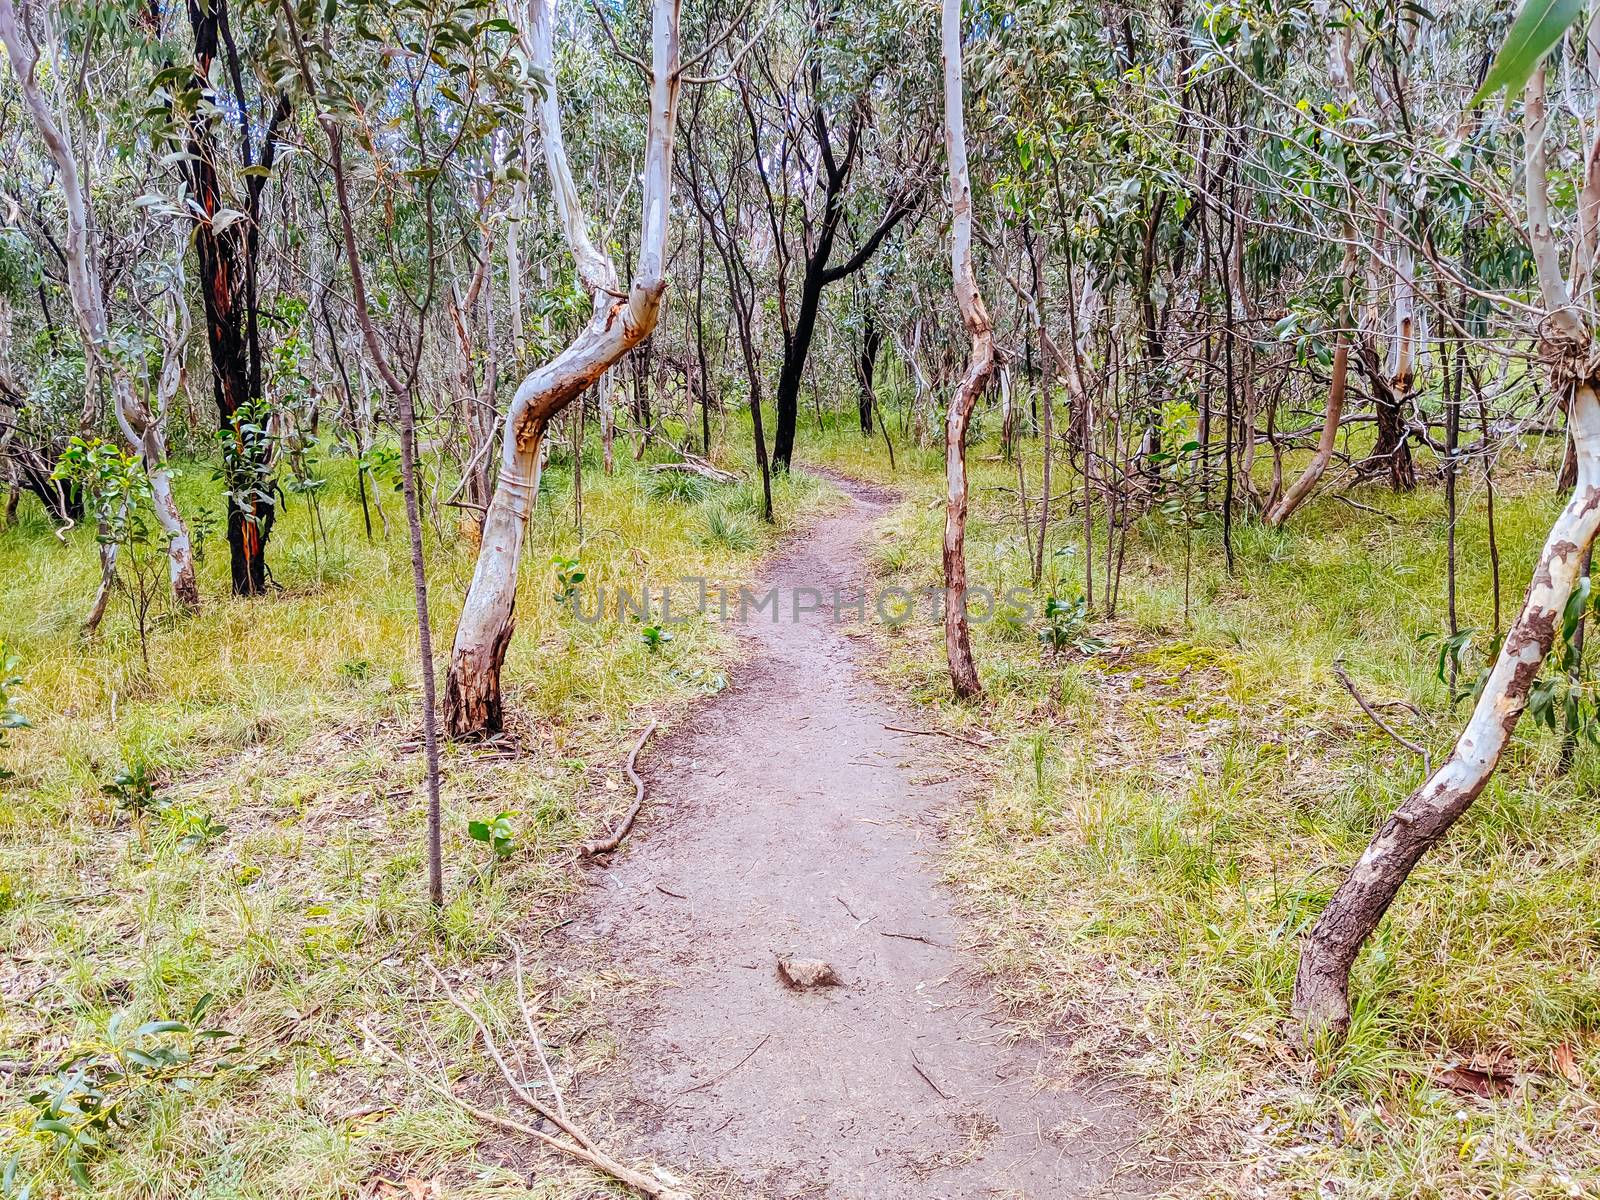 Australian Bush and Walking Path by FiledIMAGE